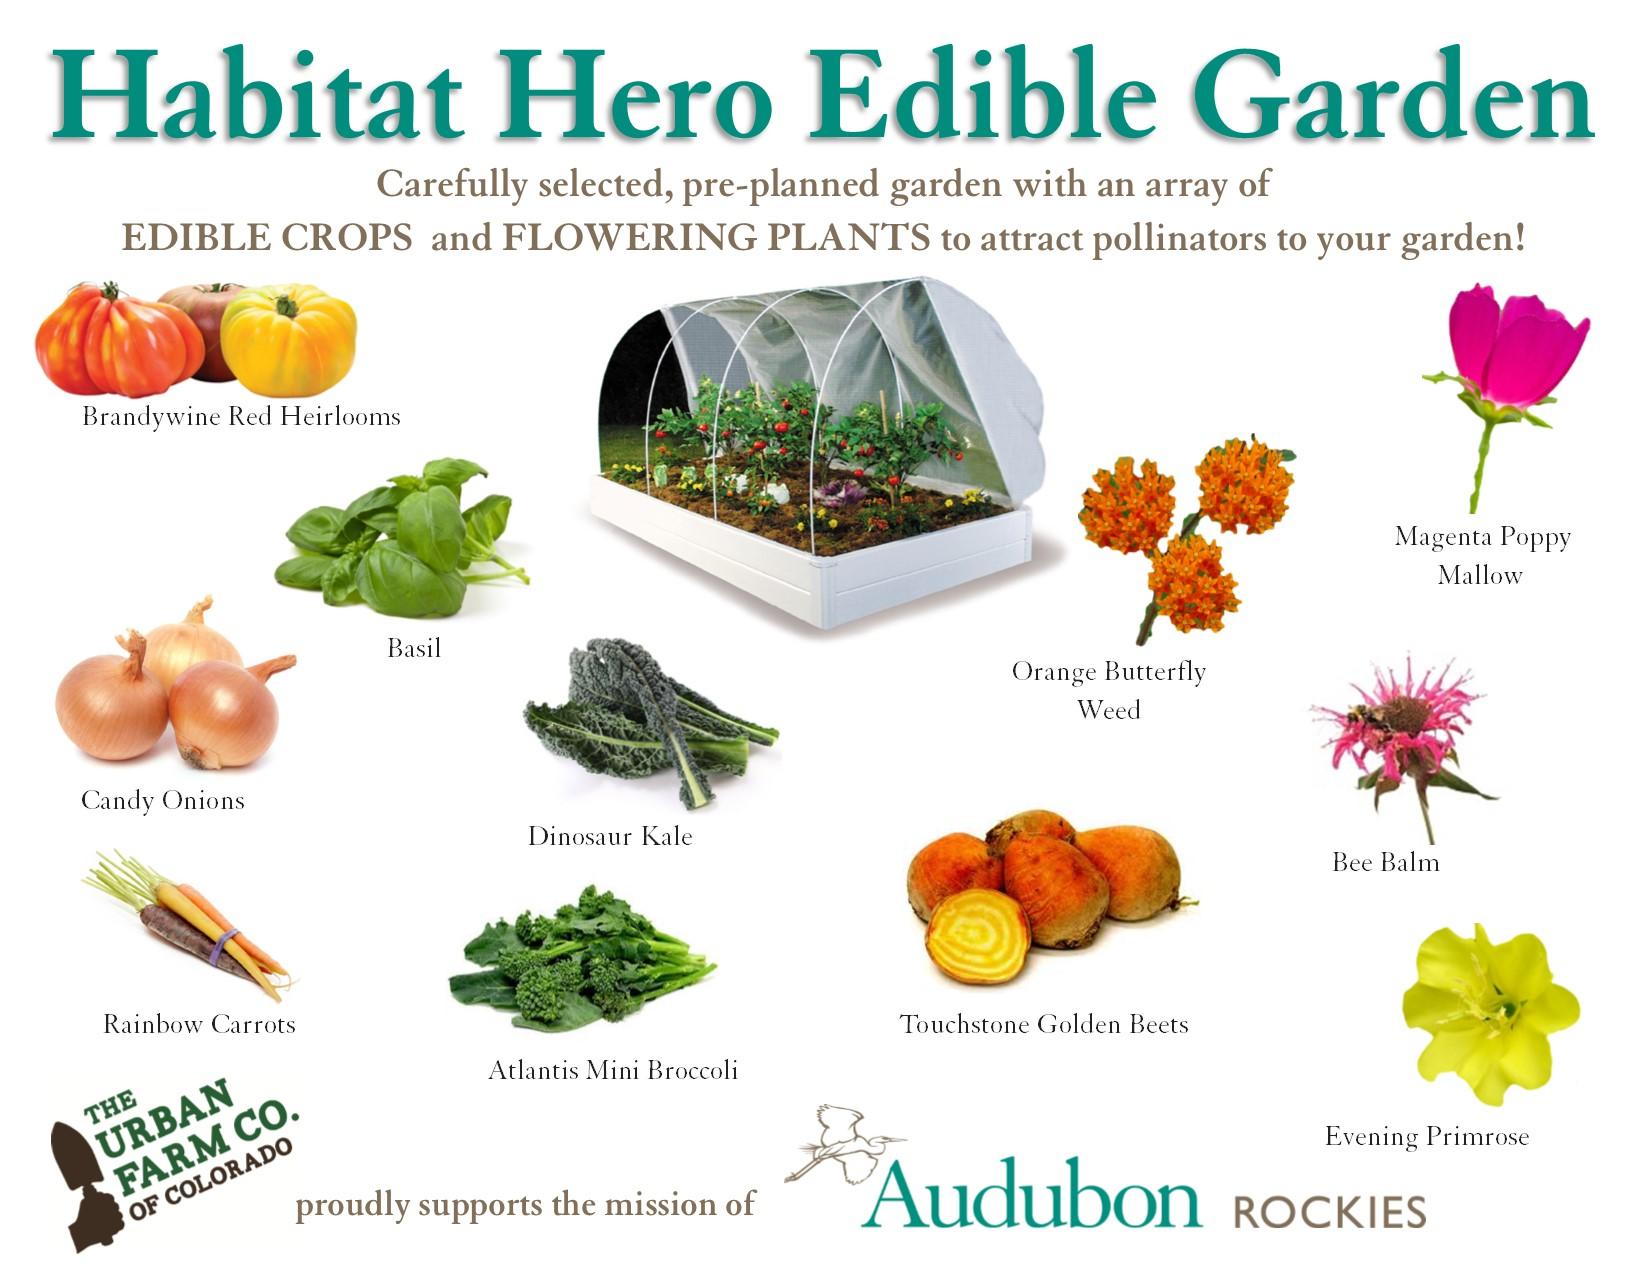 Habitat Hero Edible Garden Audubon Rockies